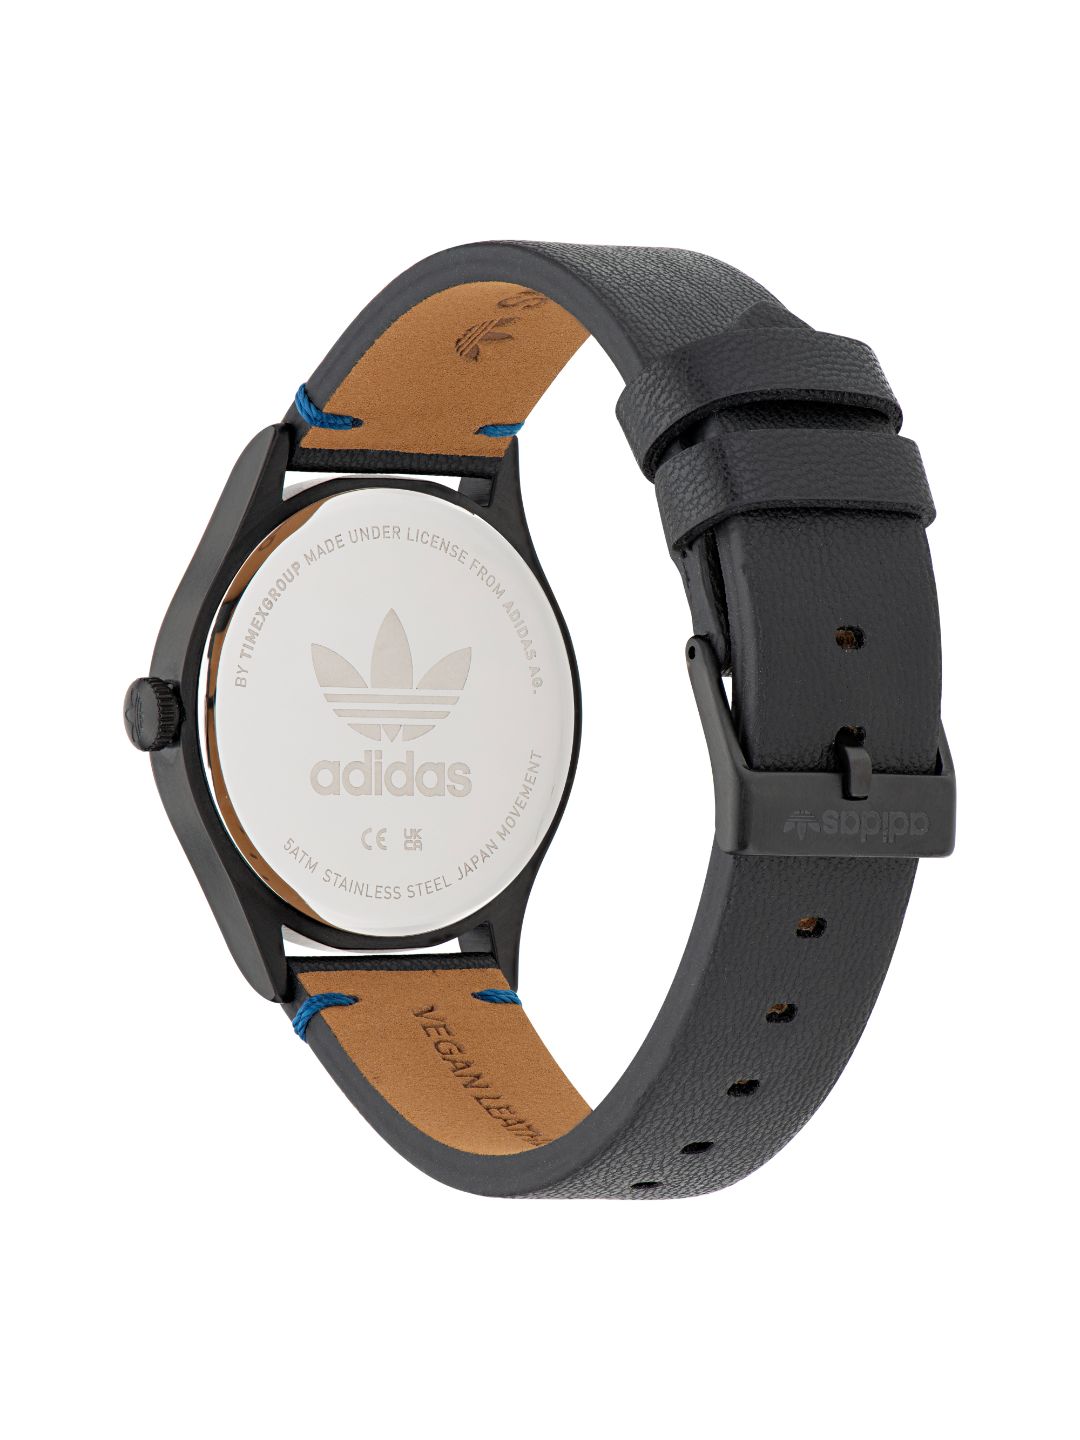 Adidas Originals Black Dial Unisex Watch - AOST23046